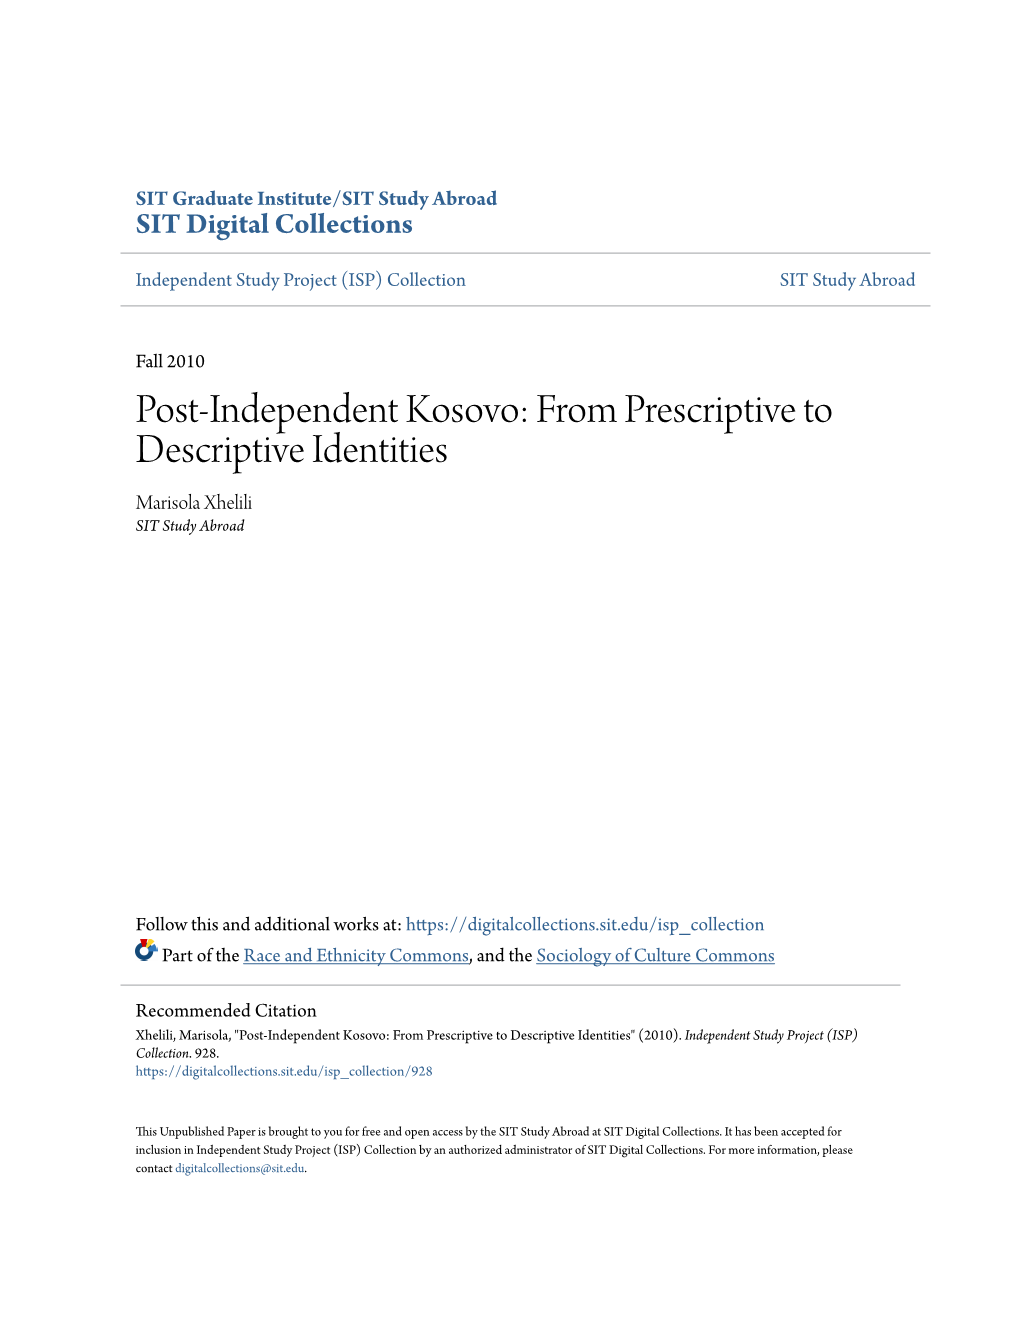 Post-Independent Kosovo: from Prescriptive to Descriptive Identities Marisola Xhelili SIT Study Abroad